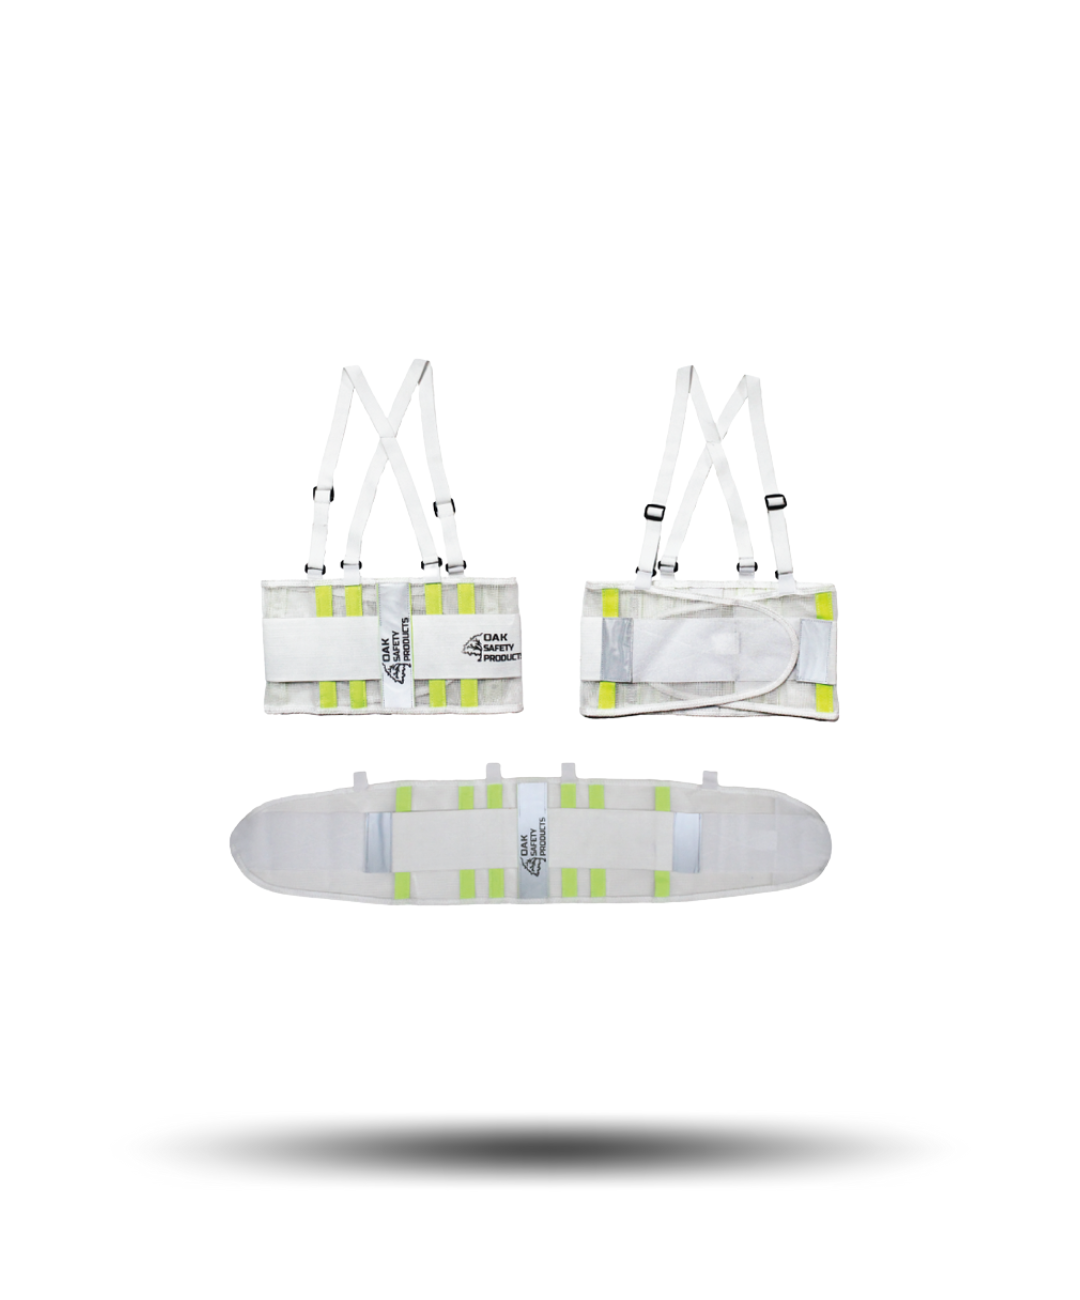 Faja blanca - amarillo neón con soporte sacrolumbar ventilada de alta visibilidad